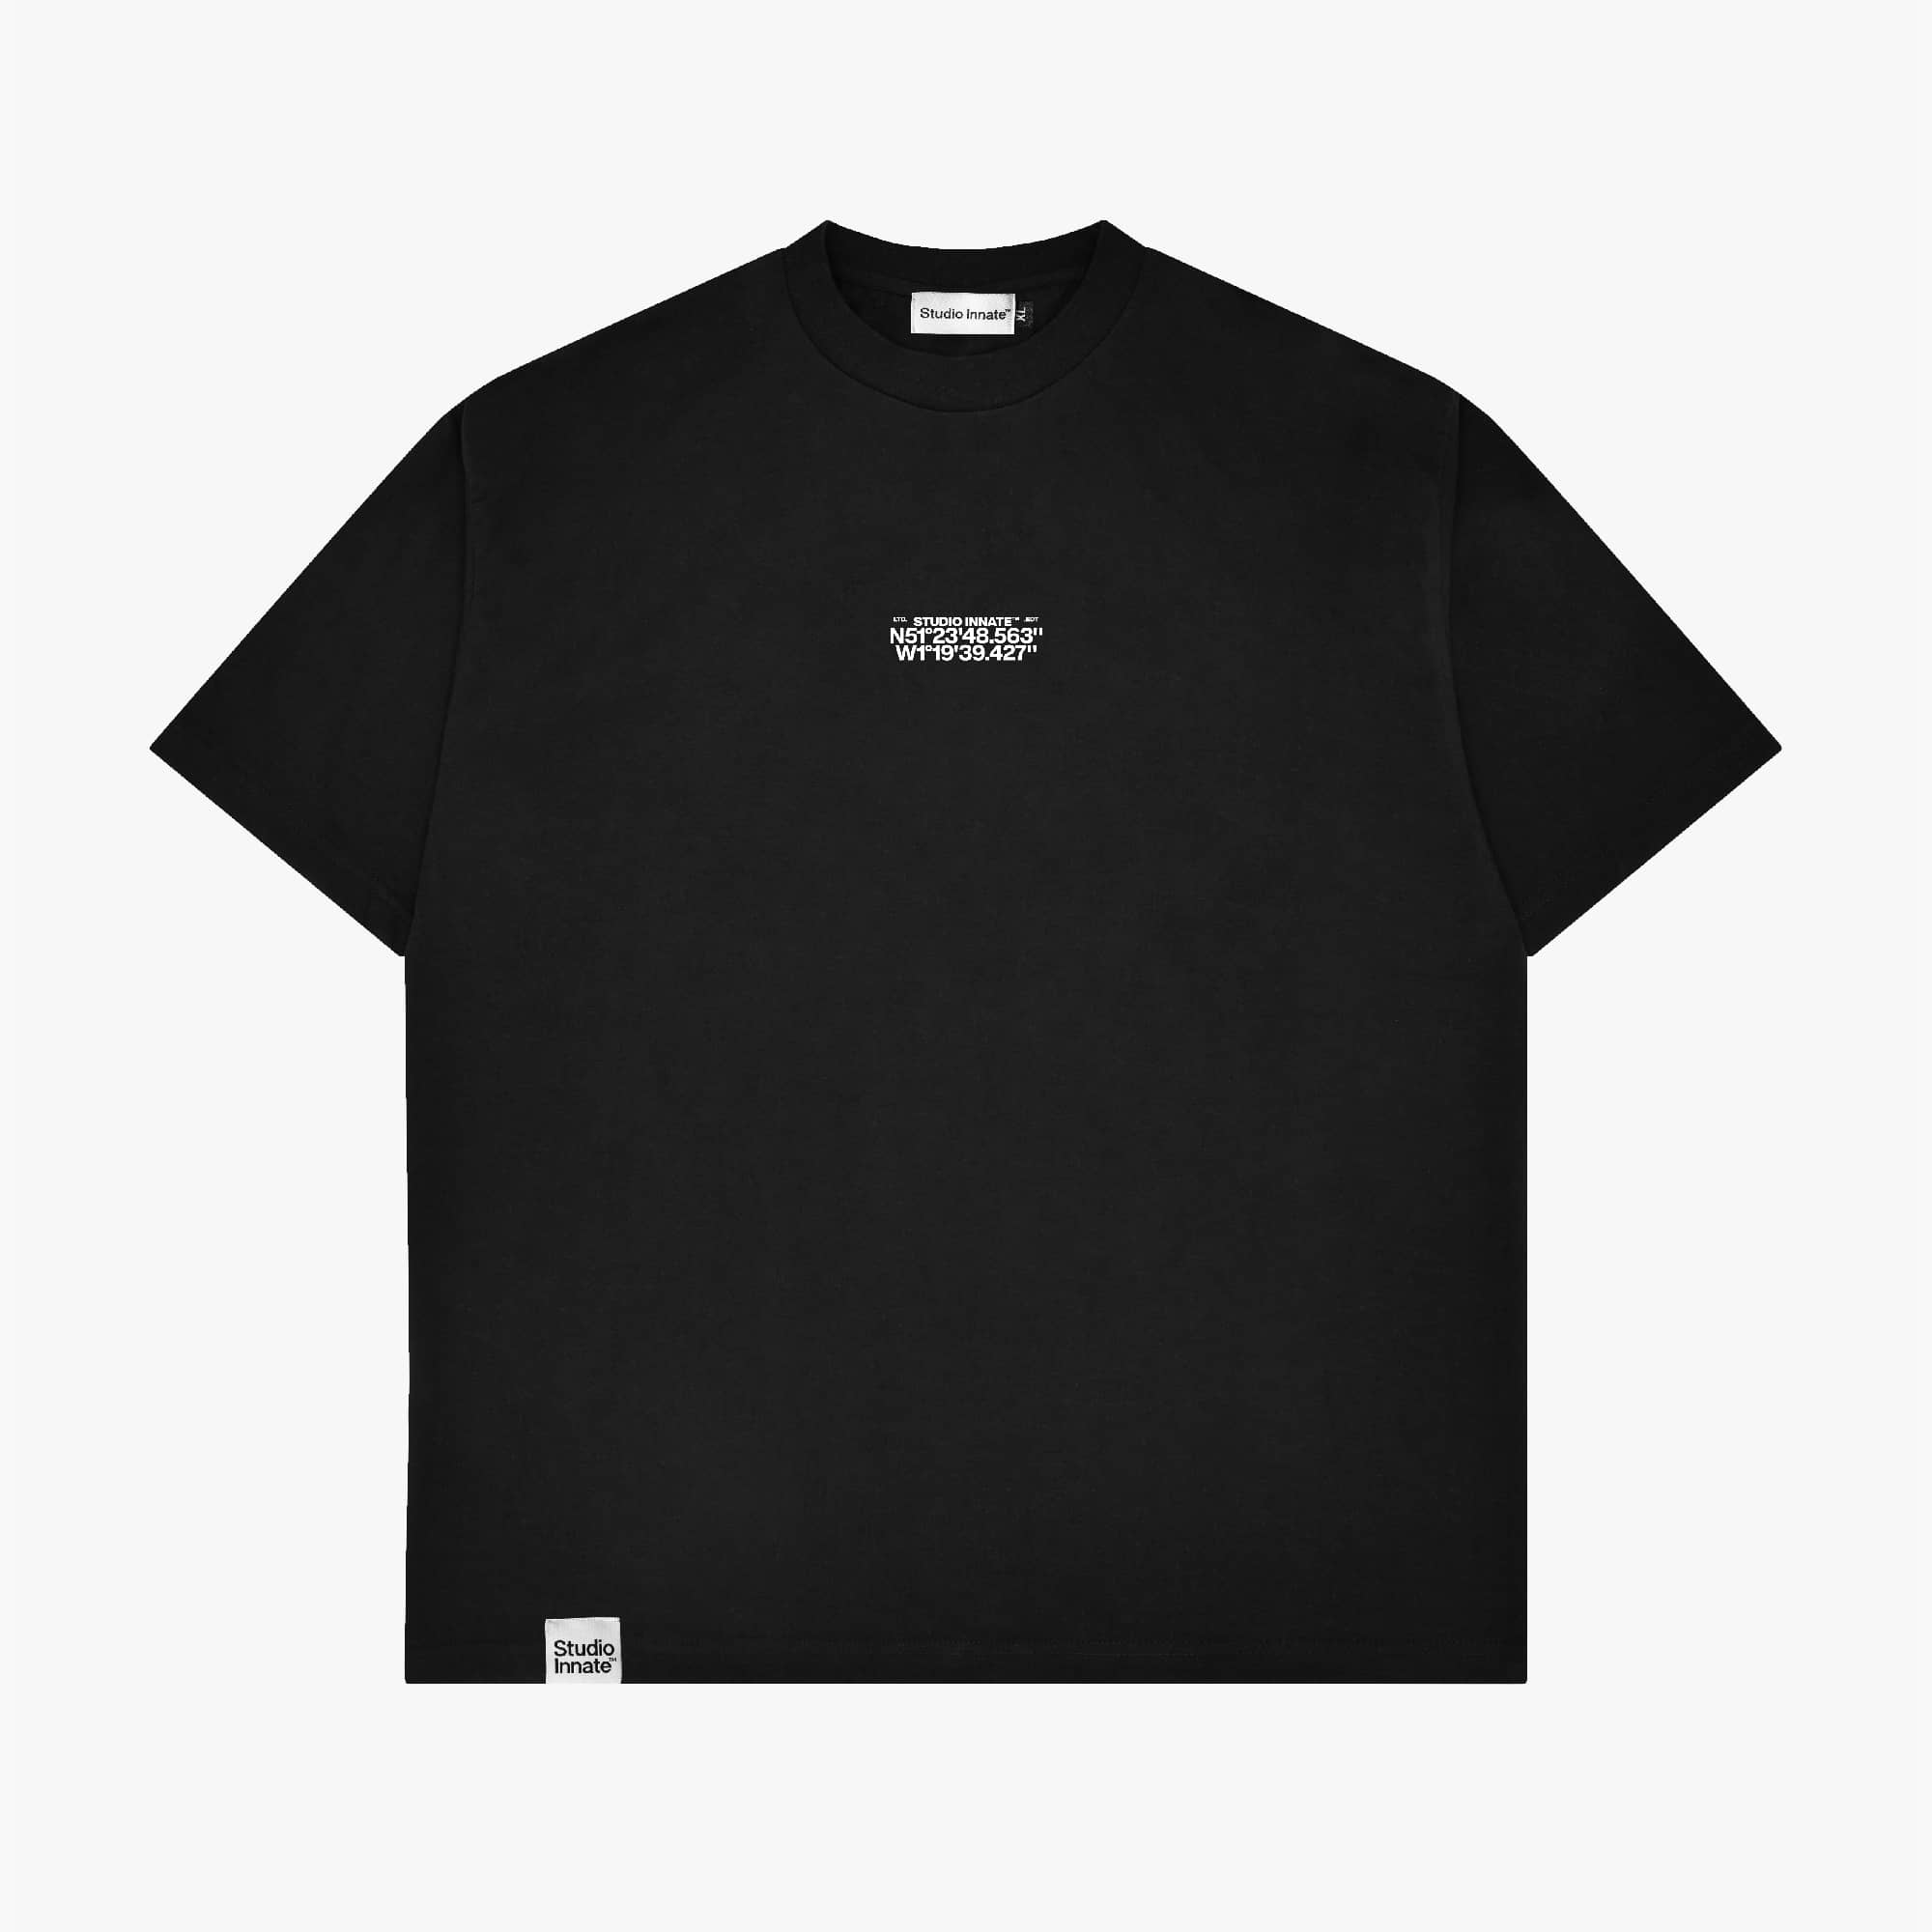 T-Shirt-Flatlay-Mockup-SPR-SMR-Black-Front